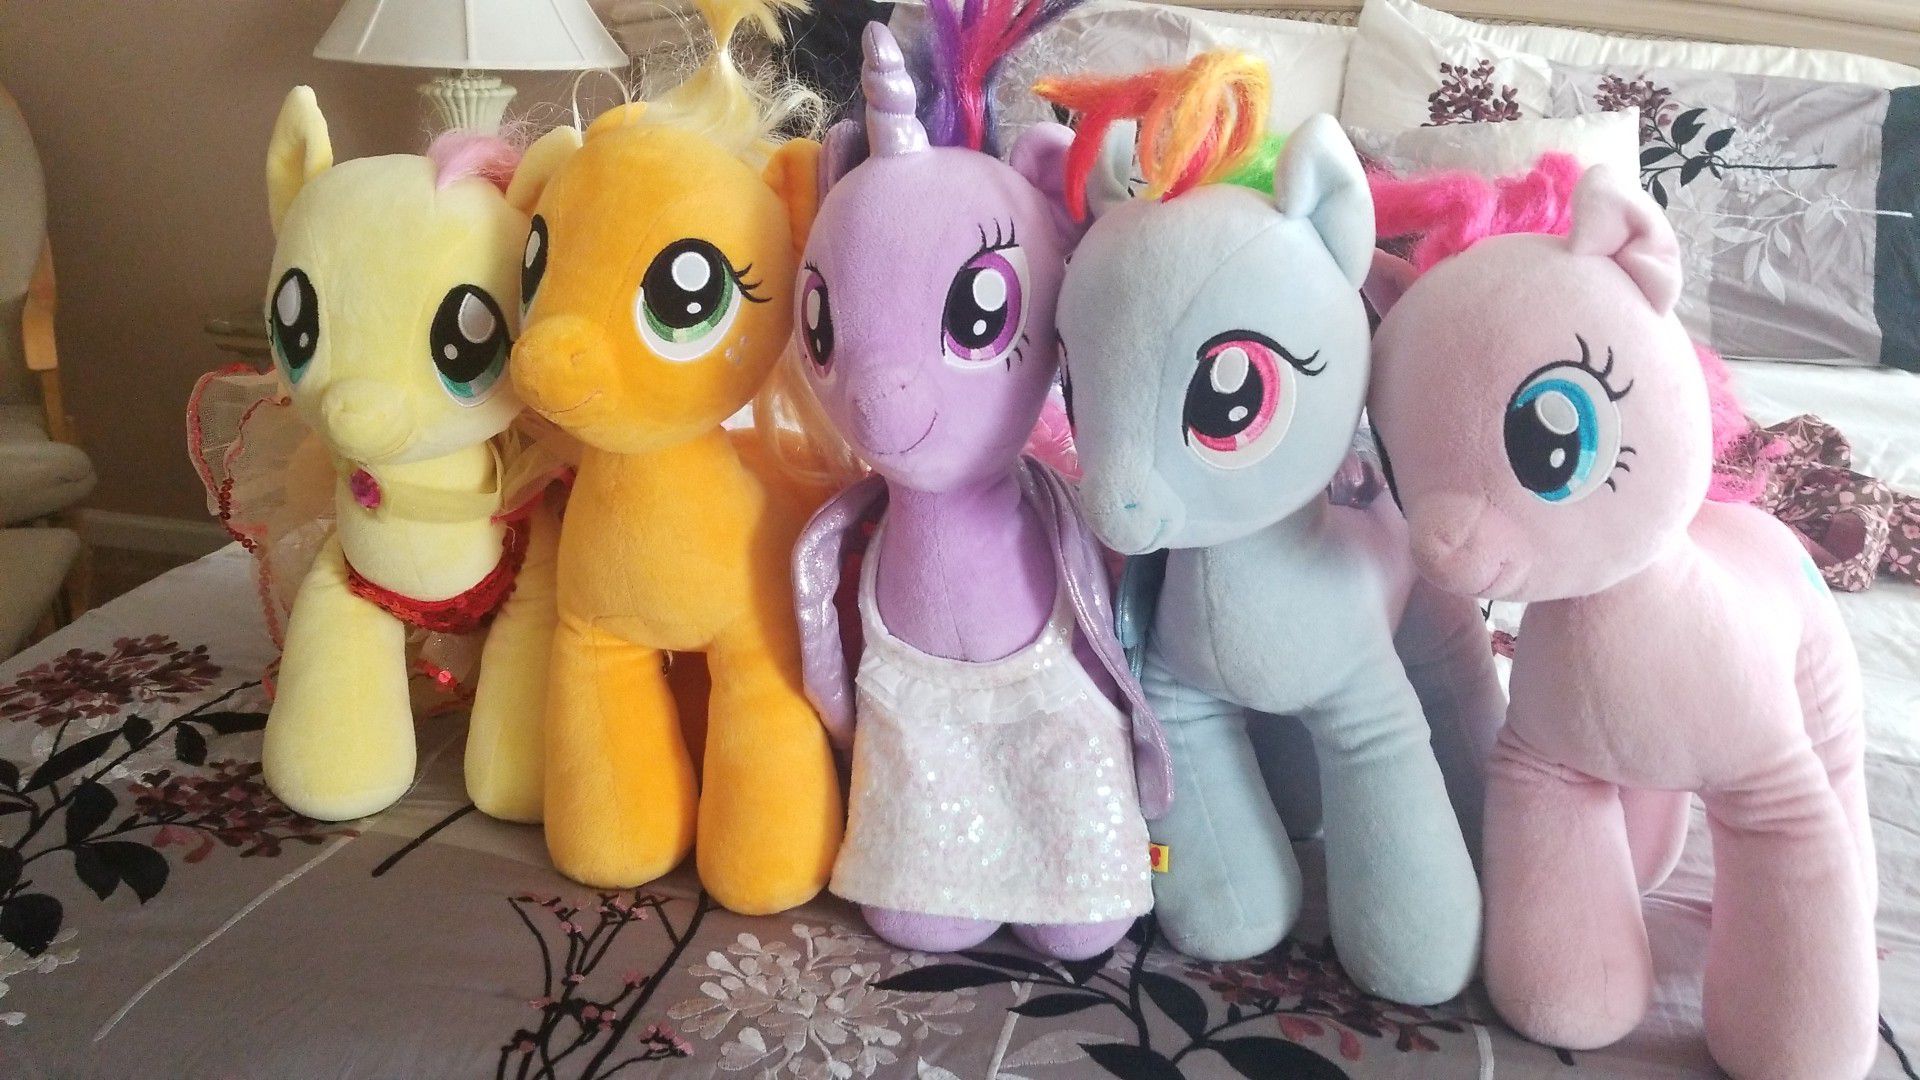 My little pony stuffed animals